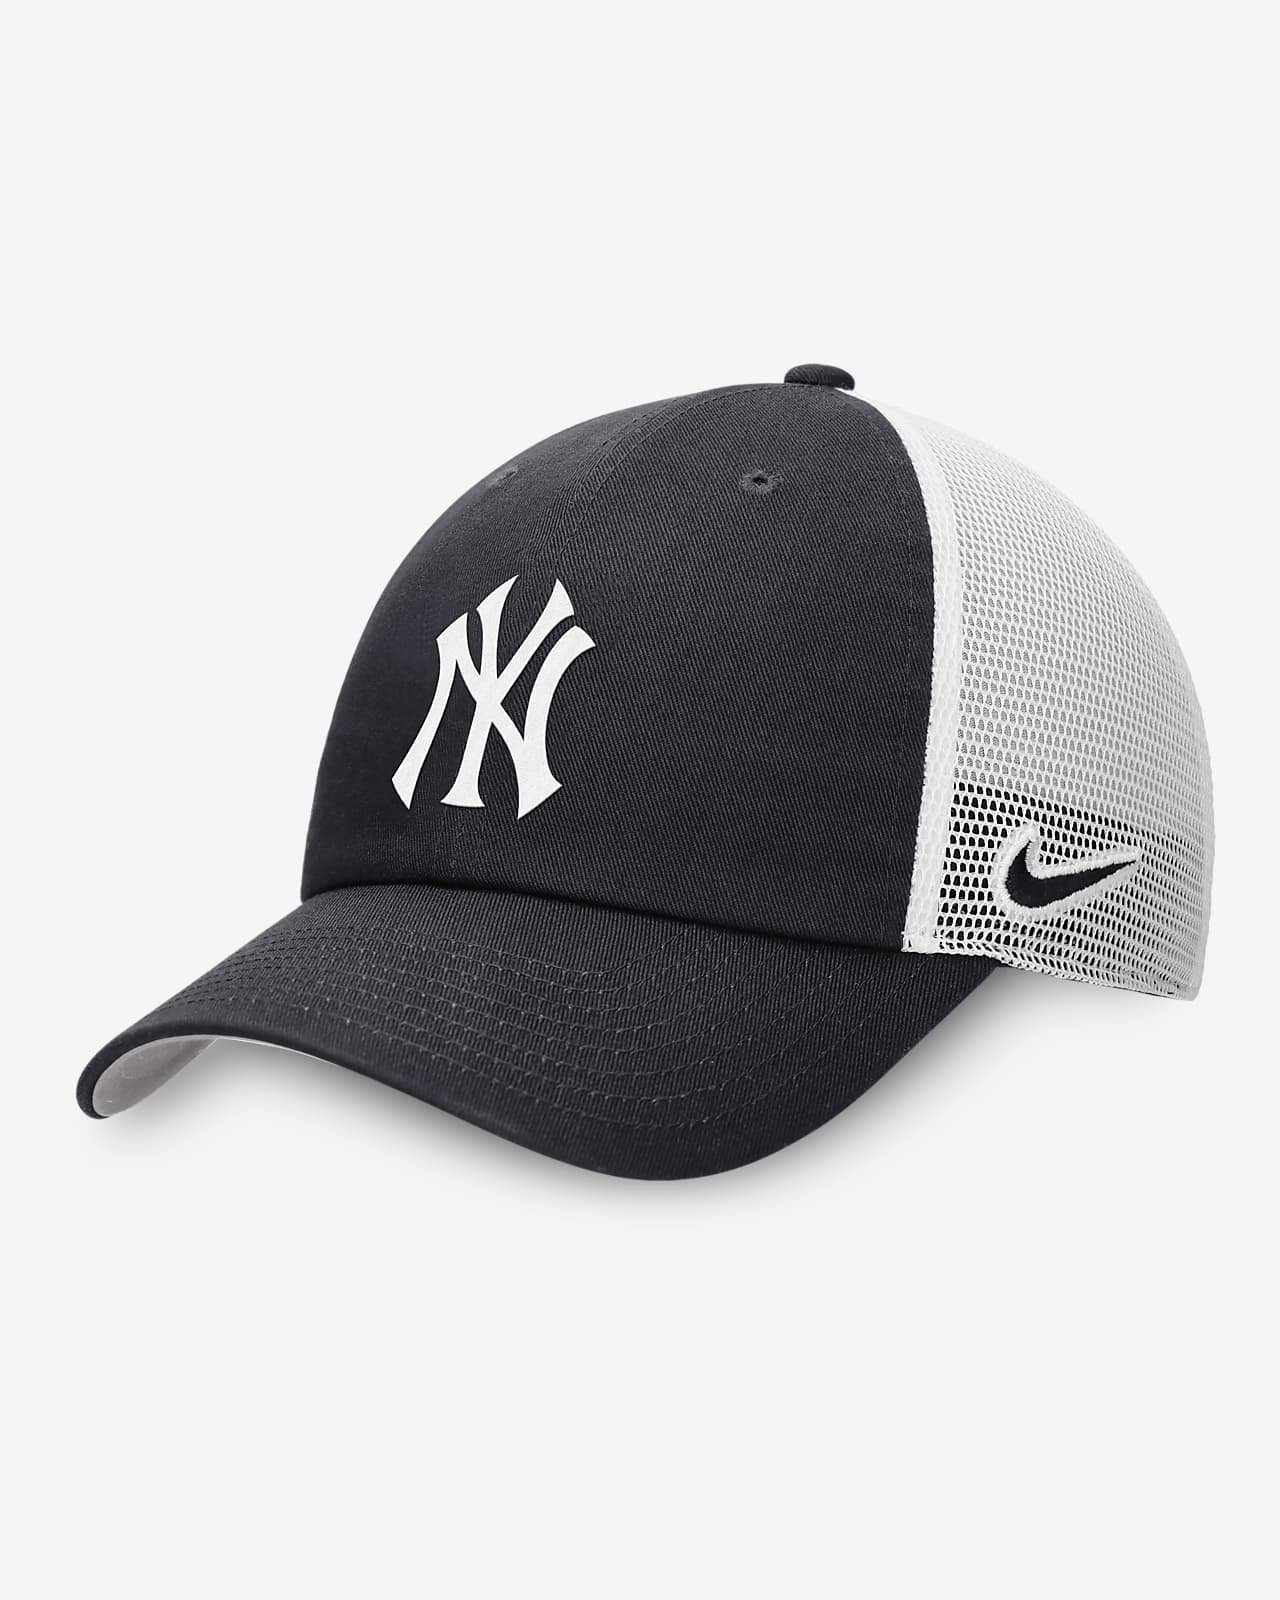 Gorra ajustable Nike MLB para hombre New York Yankees Heritage86